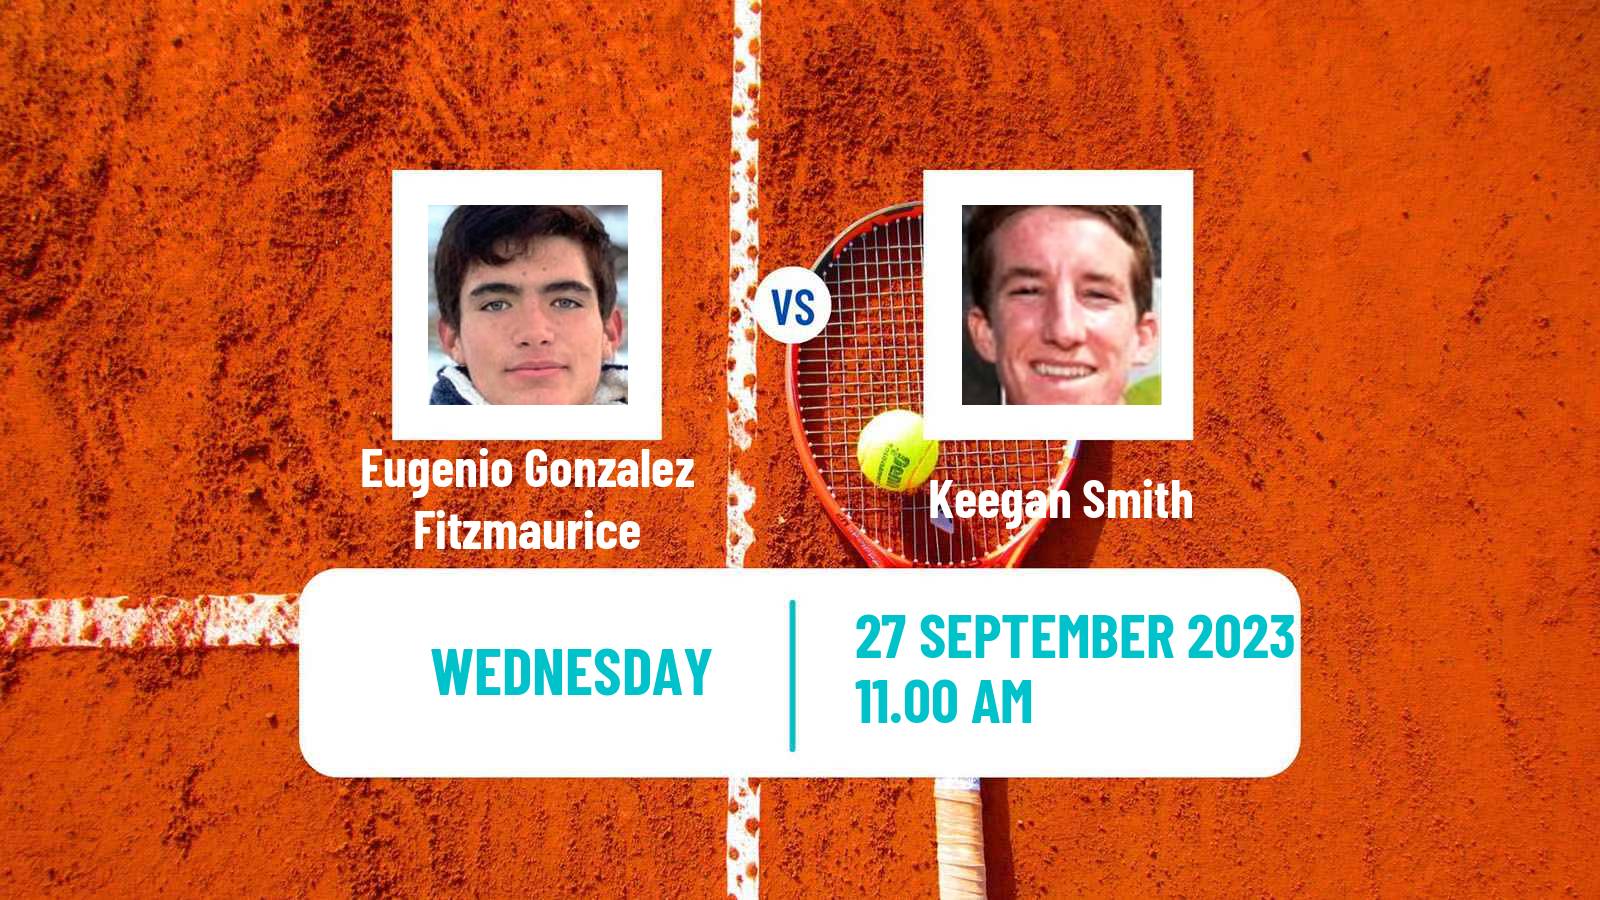 Tennis ITF M15 Albuquerque Nm Men Eugenio Gonzalez Fitzmaurice - Keegan Smith